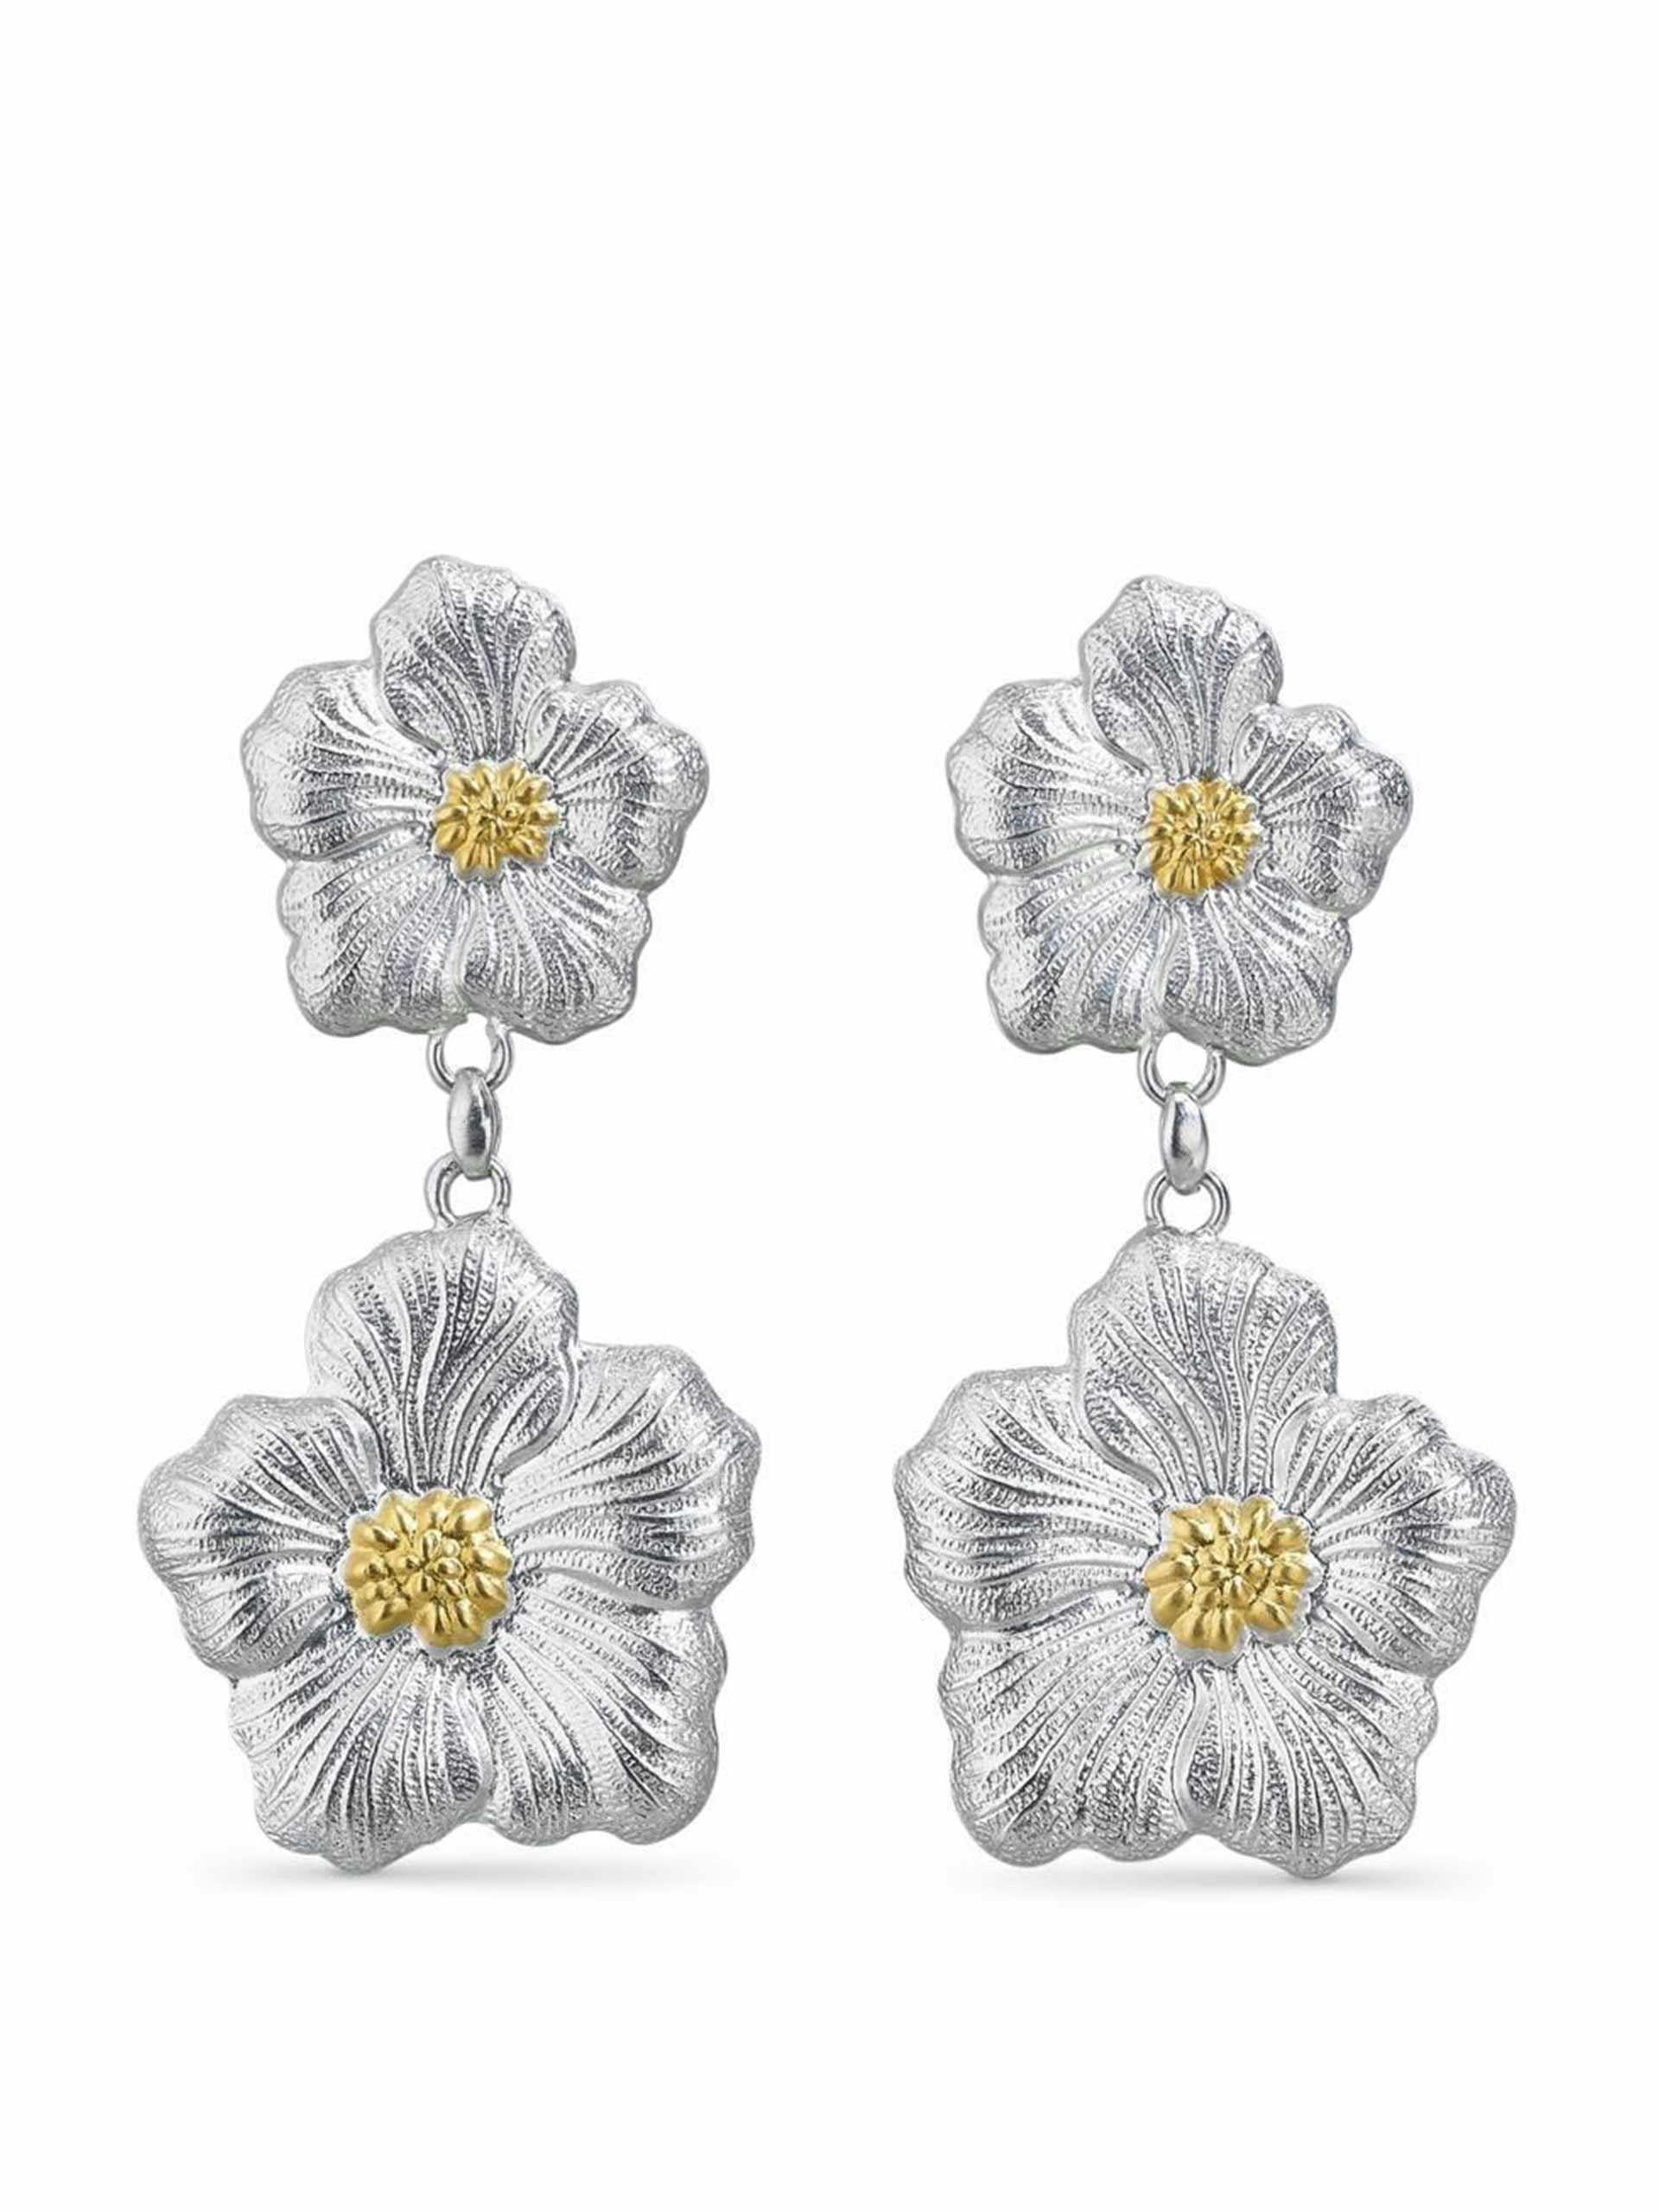 Gold-plated sterling silver flower drop earrings